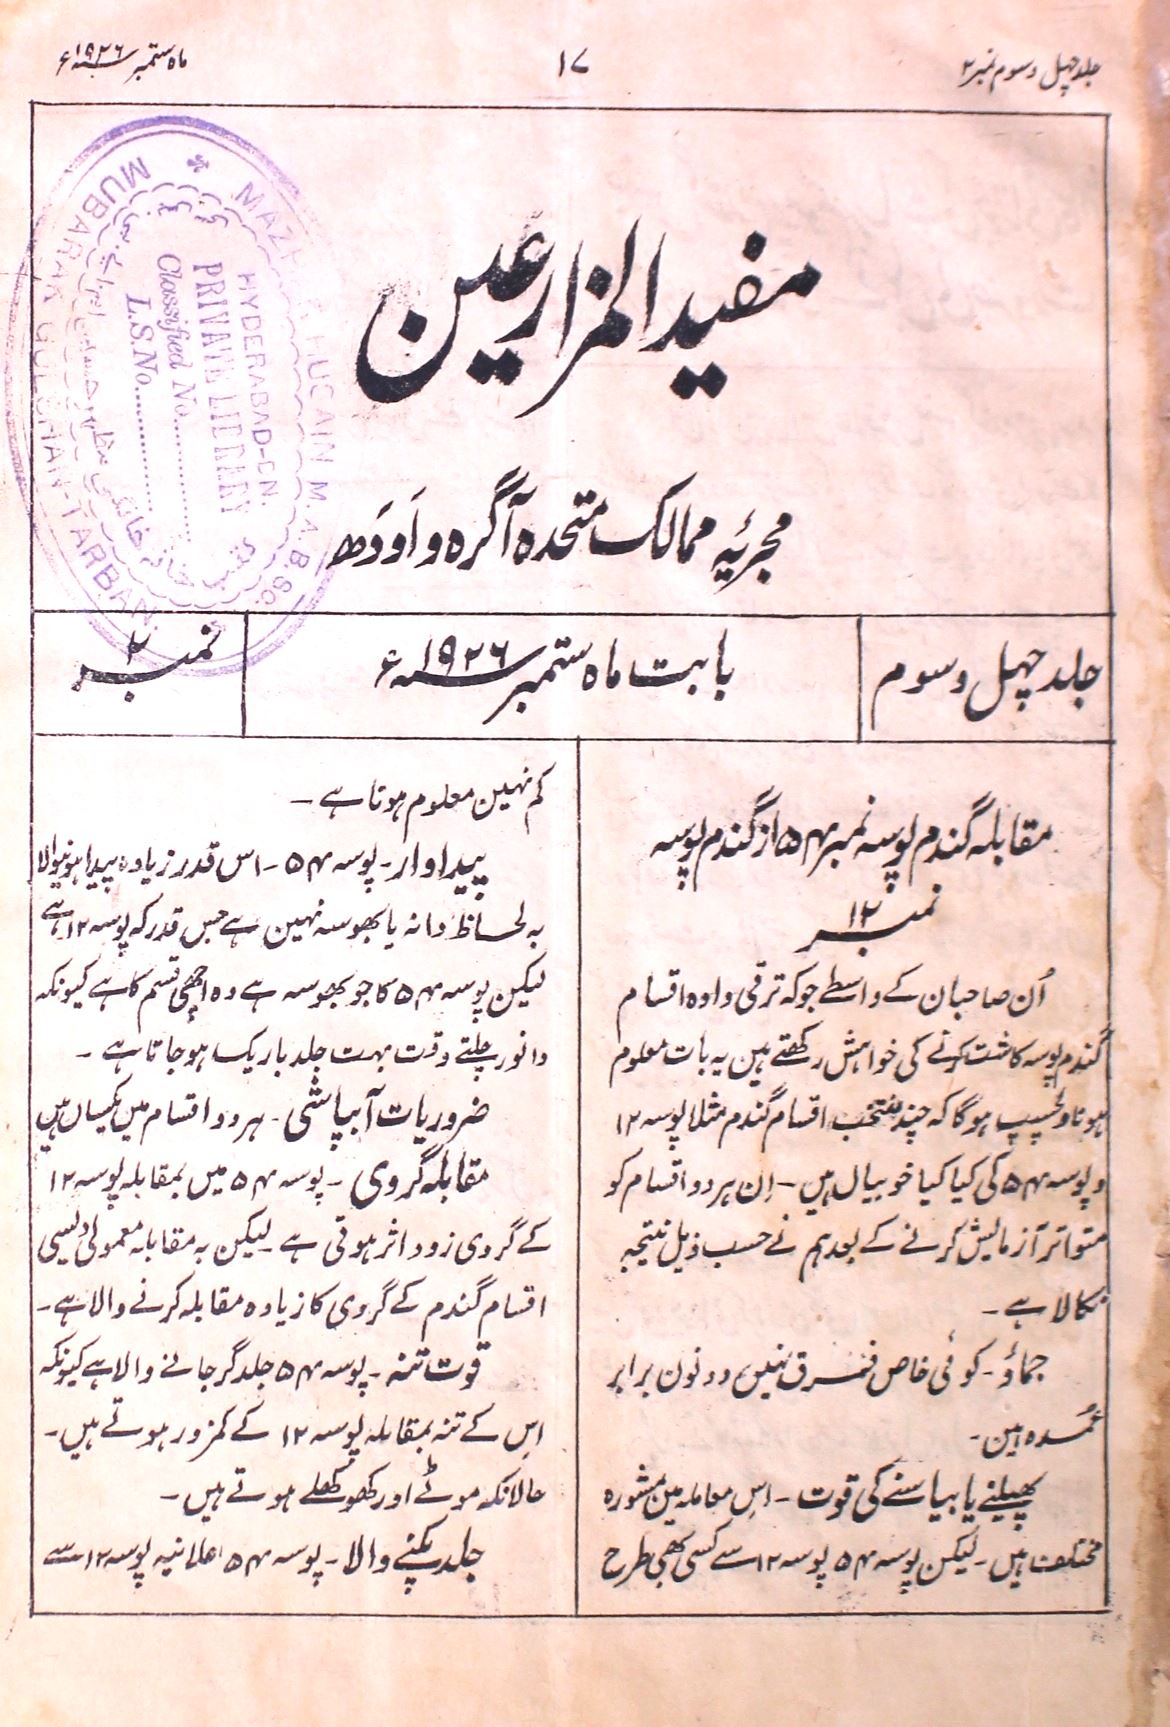 Mufidul Muzarieen Jild.43 No.2 Sep 1926-SVK-Shumara Number-002